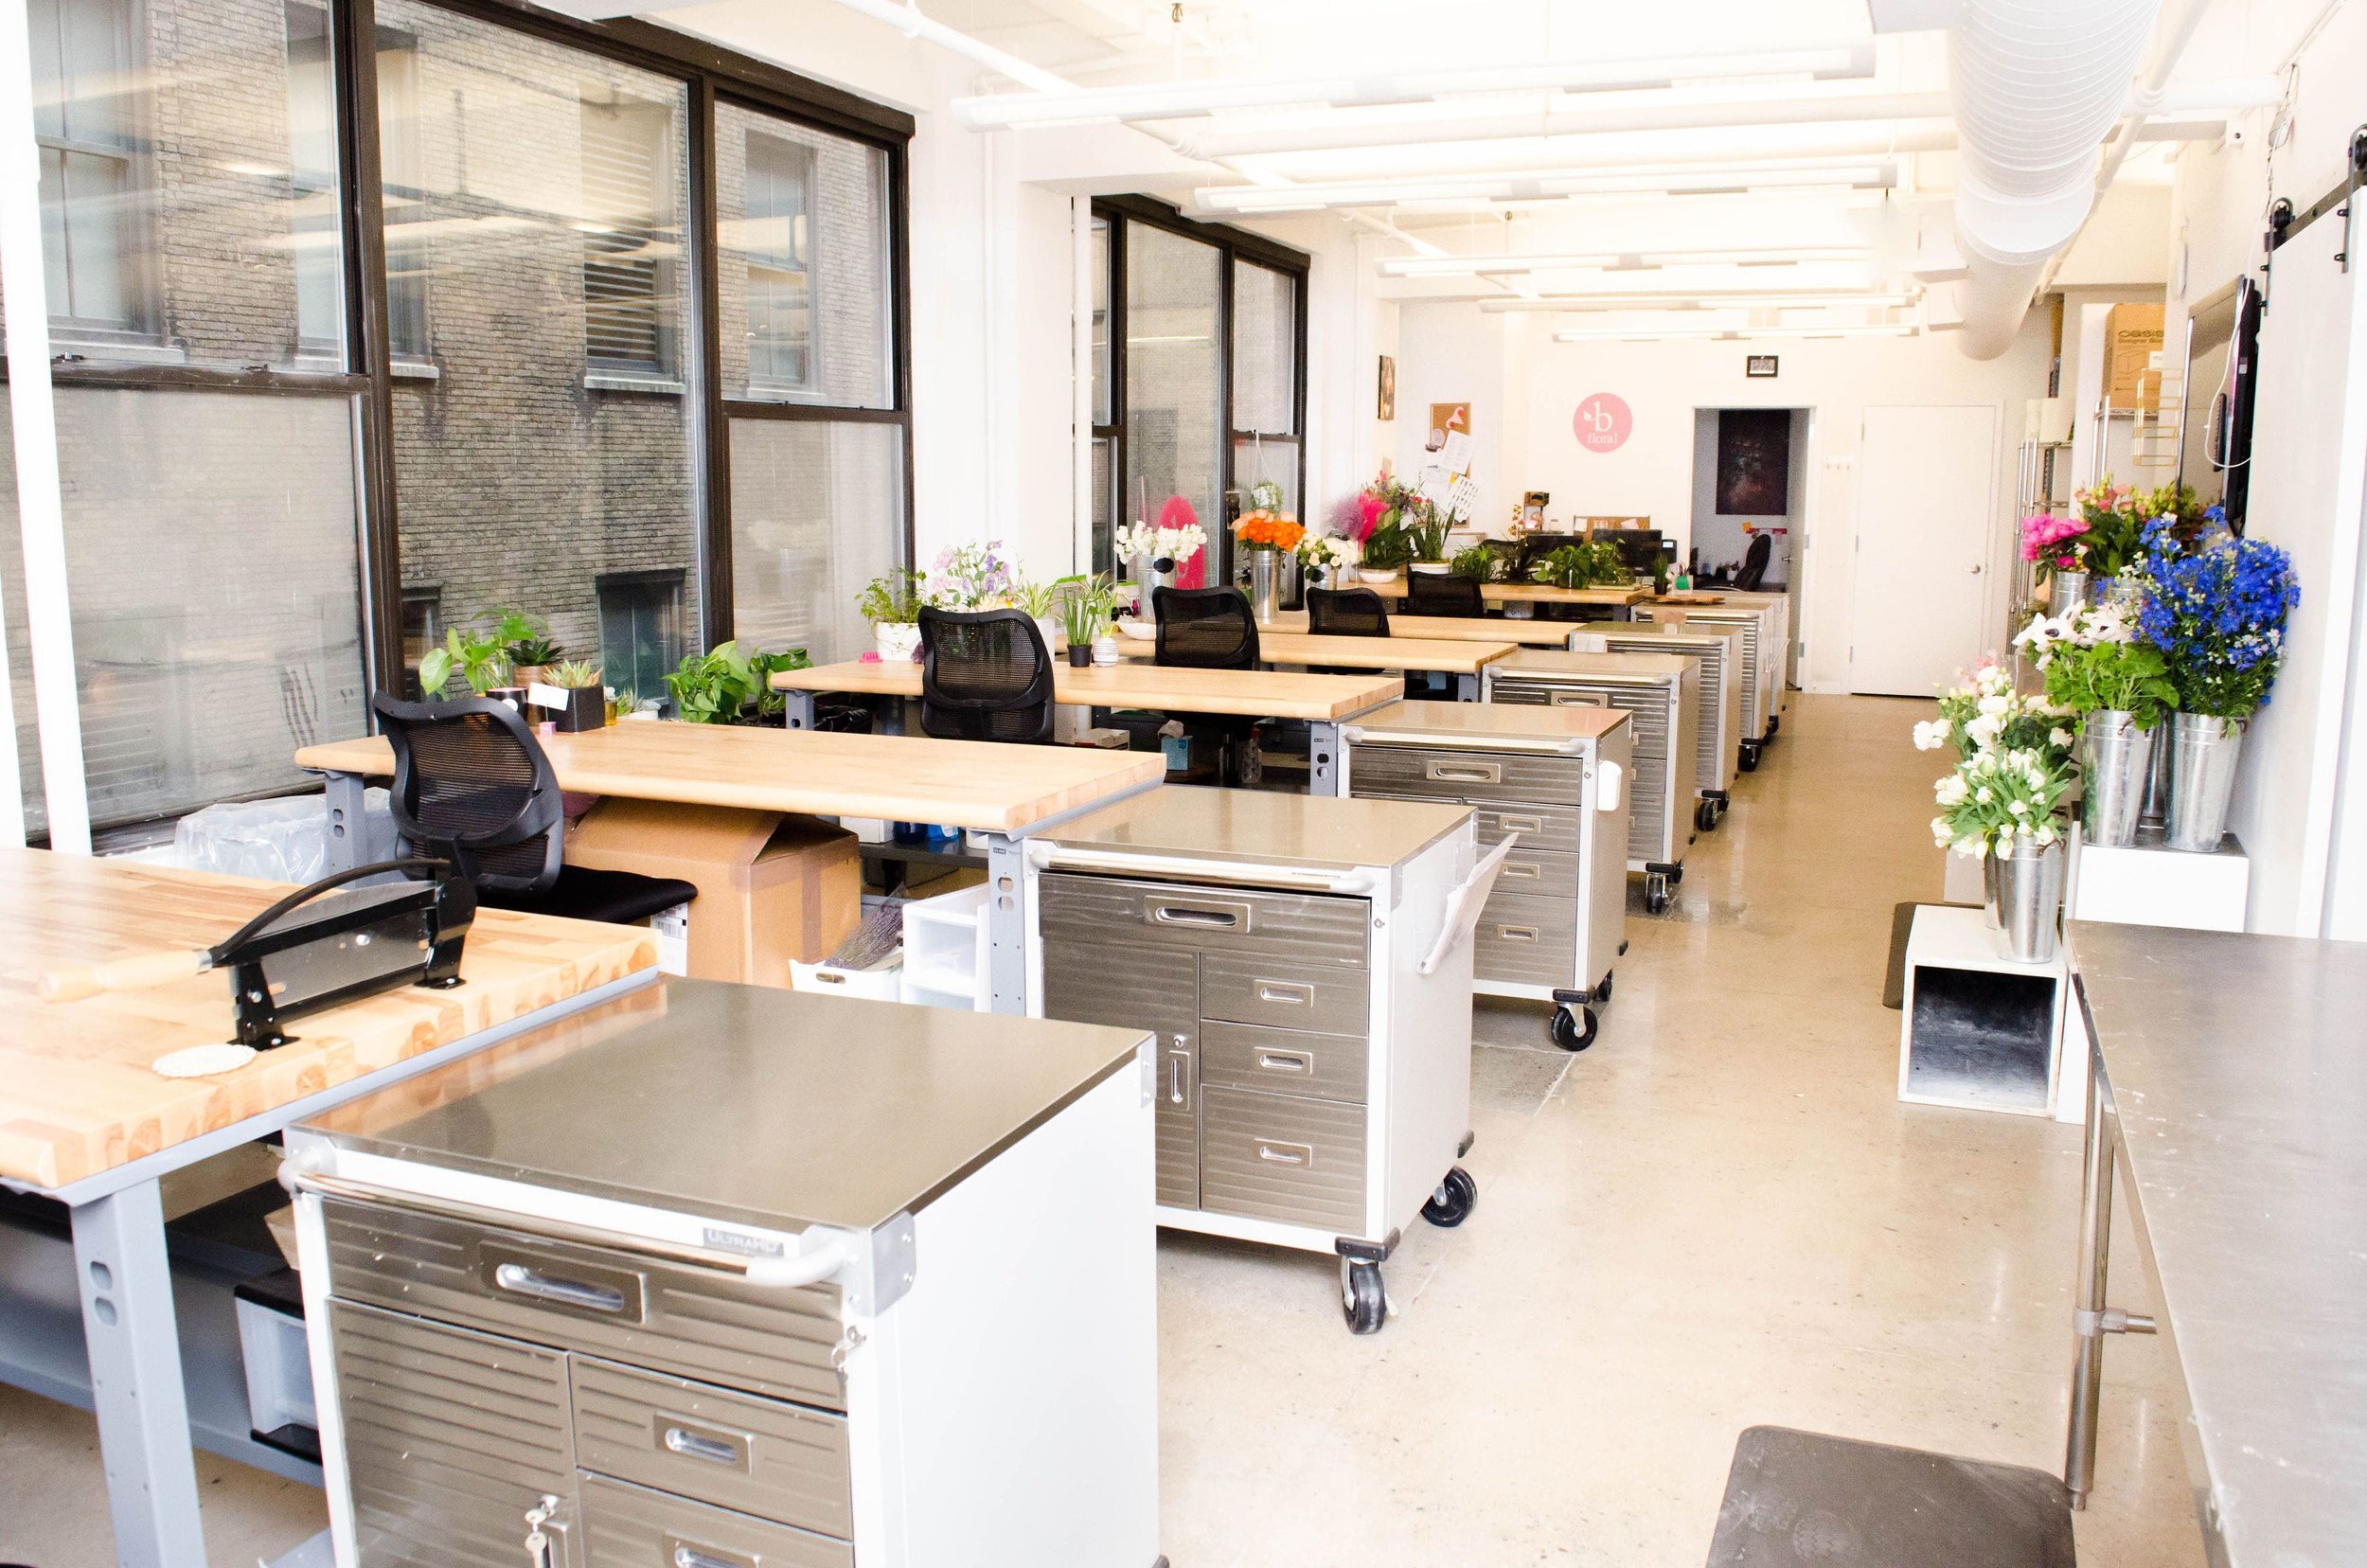 NEW - OFFICE - SPACE - MANHATTAN - COOL - OPEN - DESIGN - STUDIO - B FLORAL